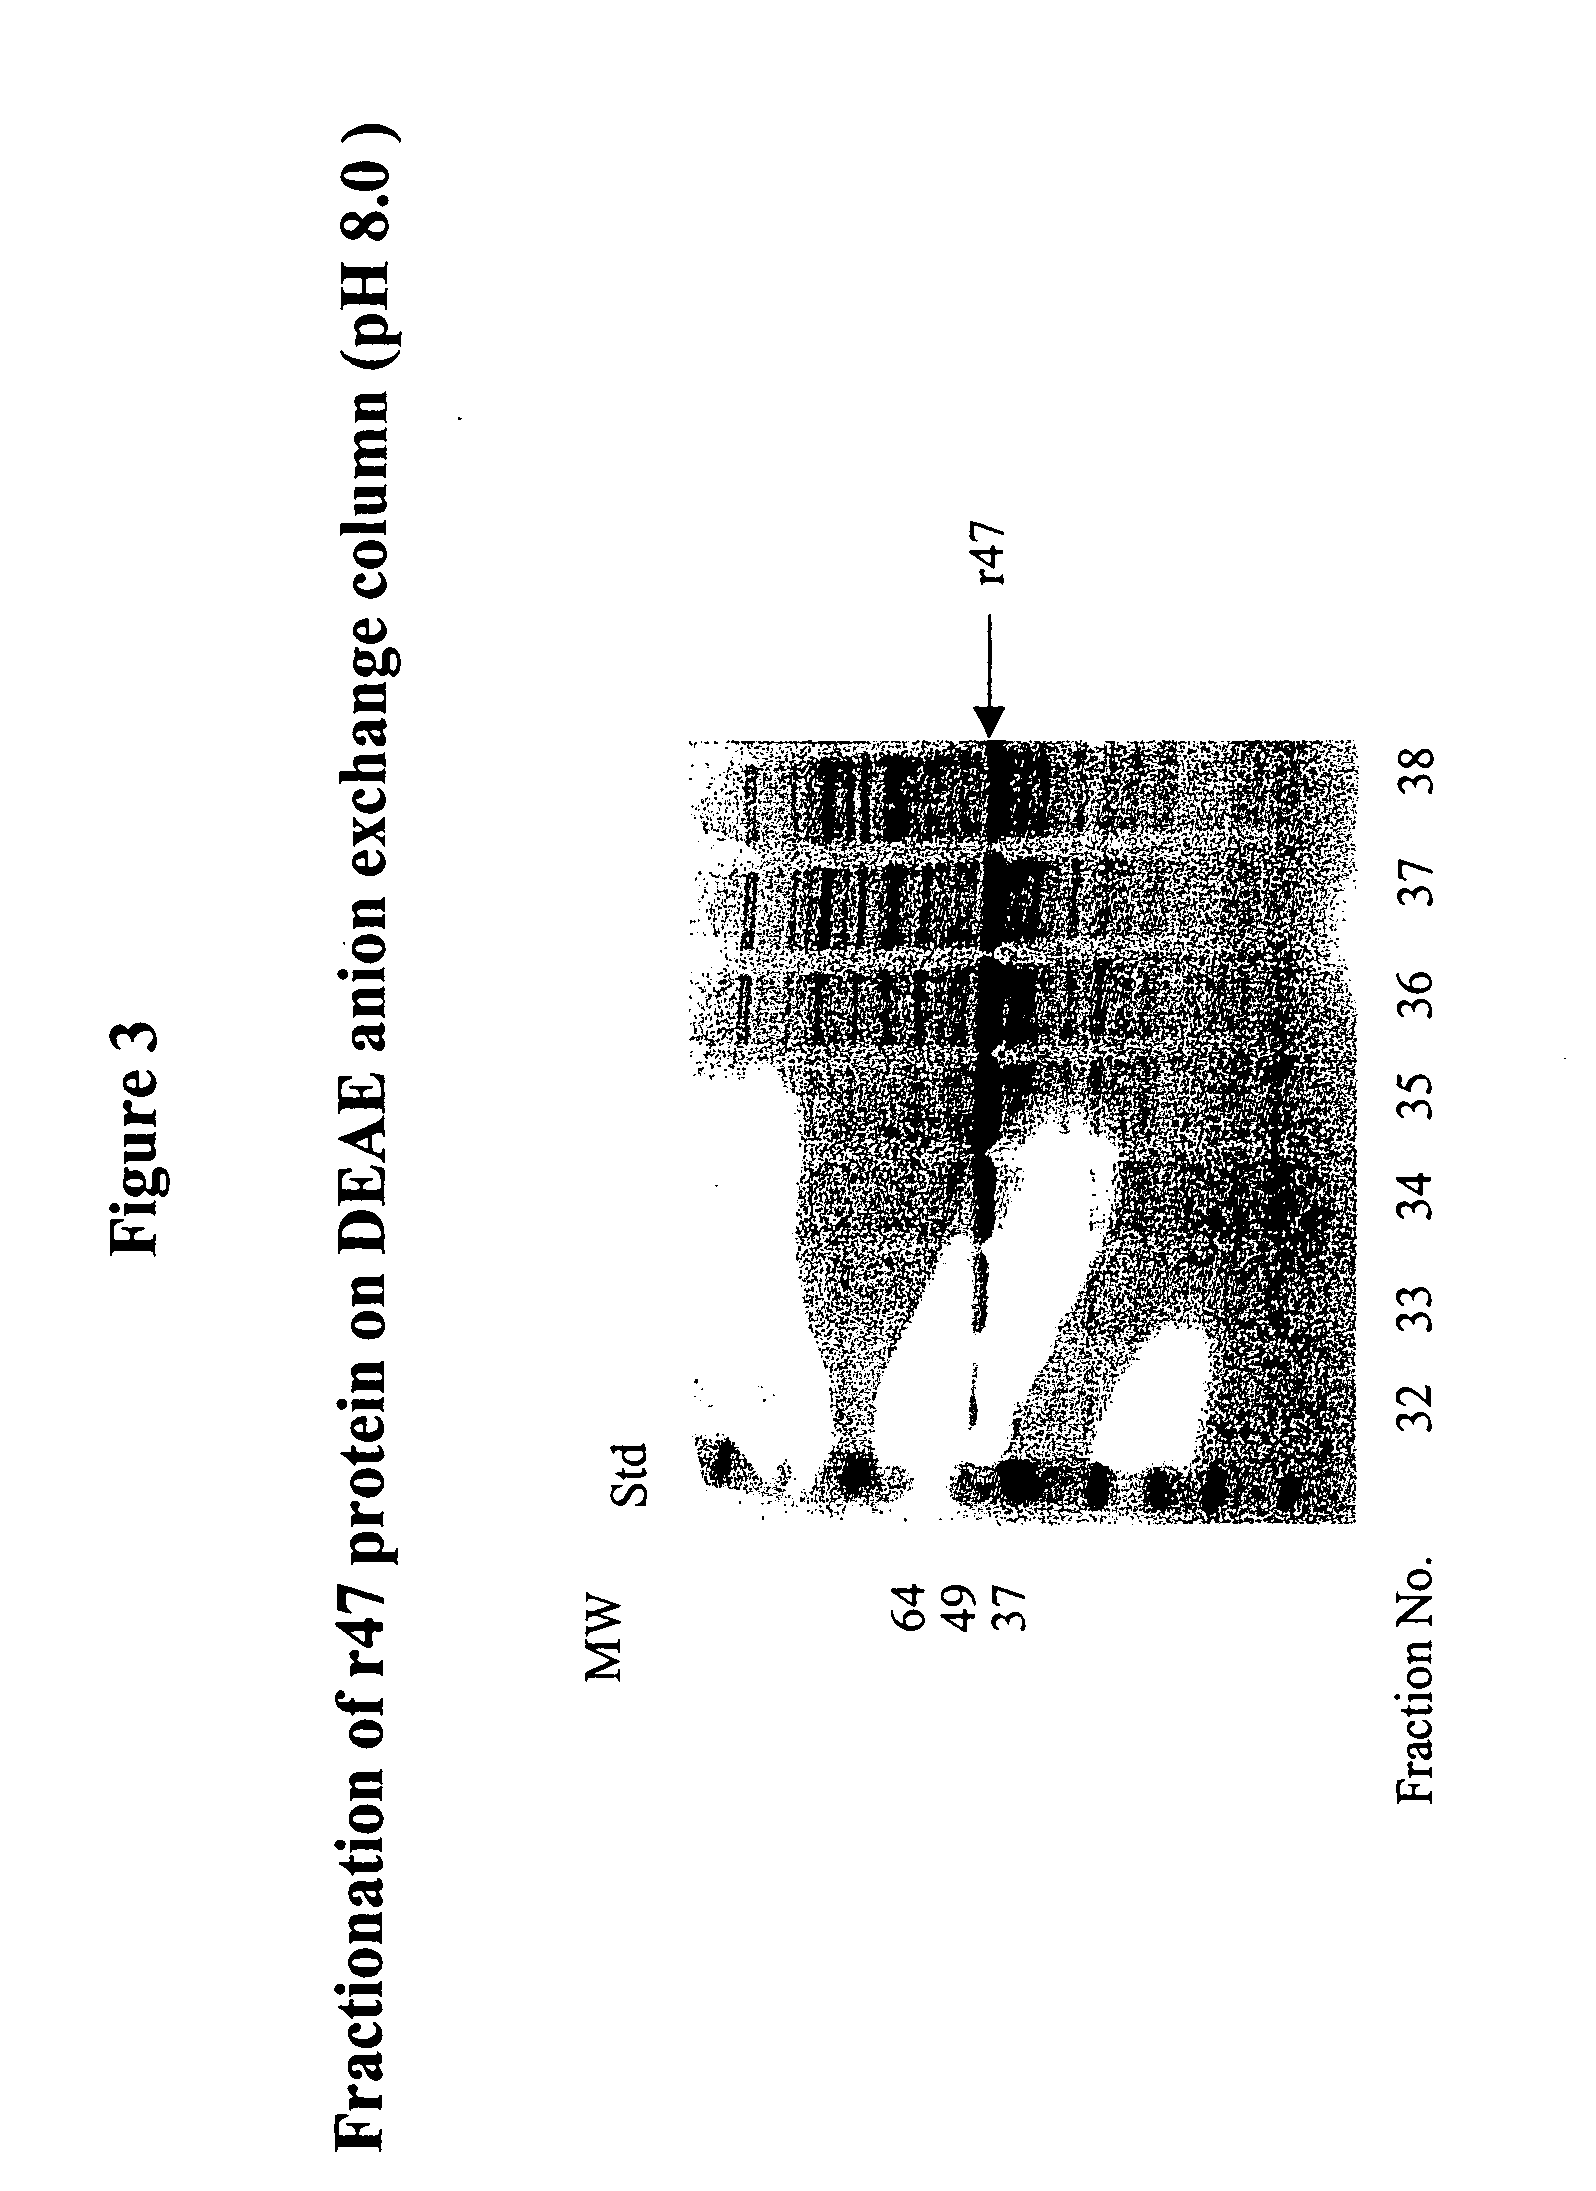 Orientia tsutsugamushi truncated recombinant outer membrane protein (r47) and (r56) vaccines diagnostics and therapeutics for scrub typhus and HIV infection